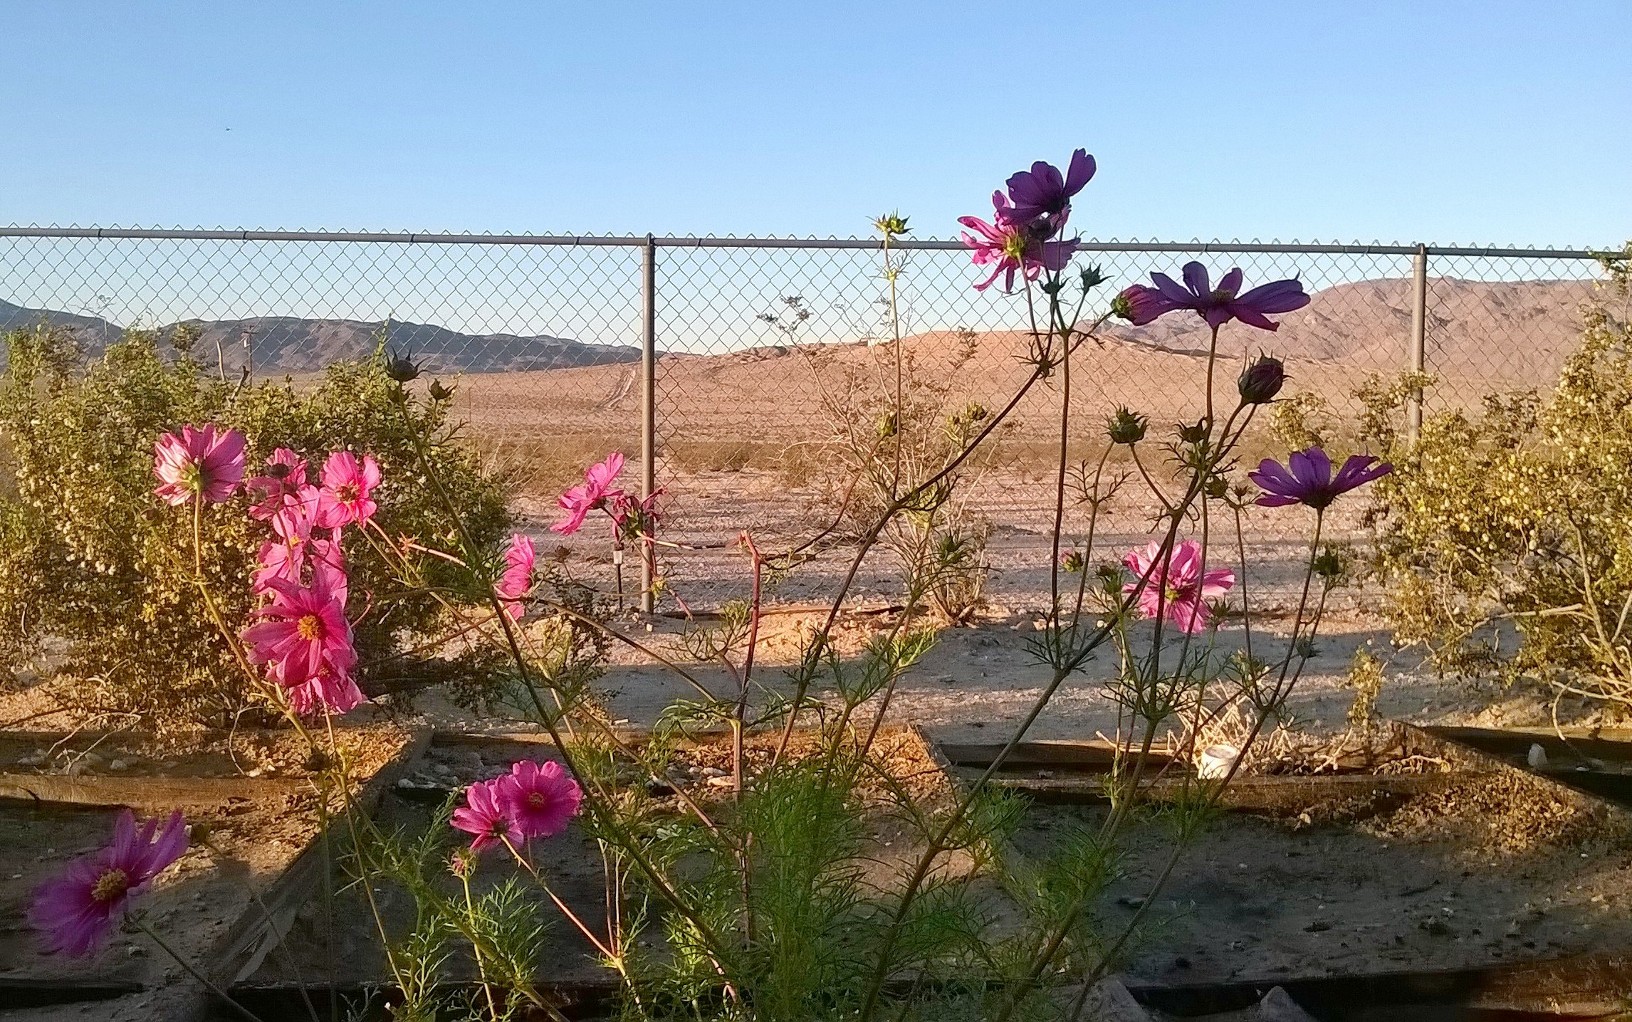 Wildflowers in my garden against the Mojave desert background